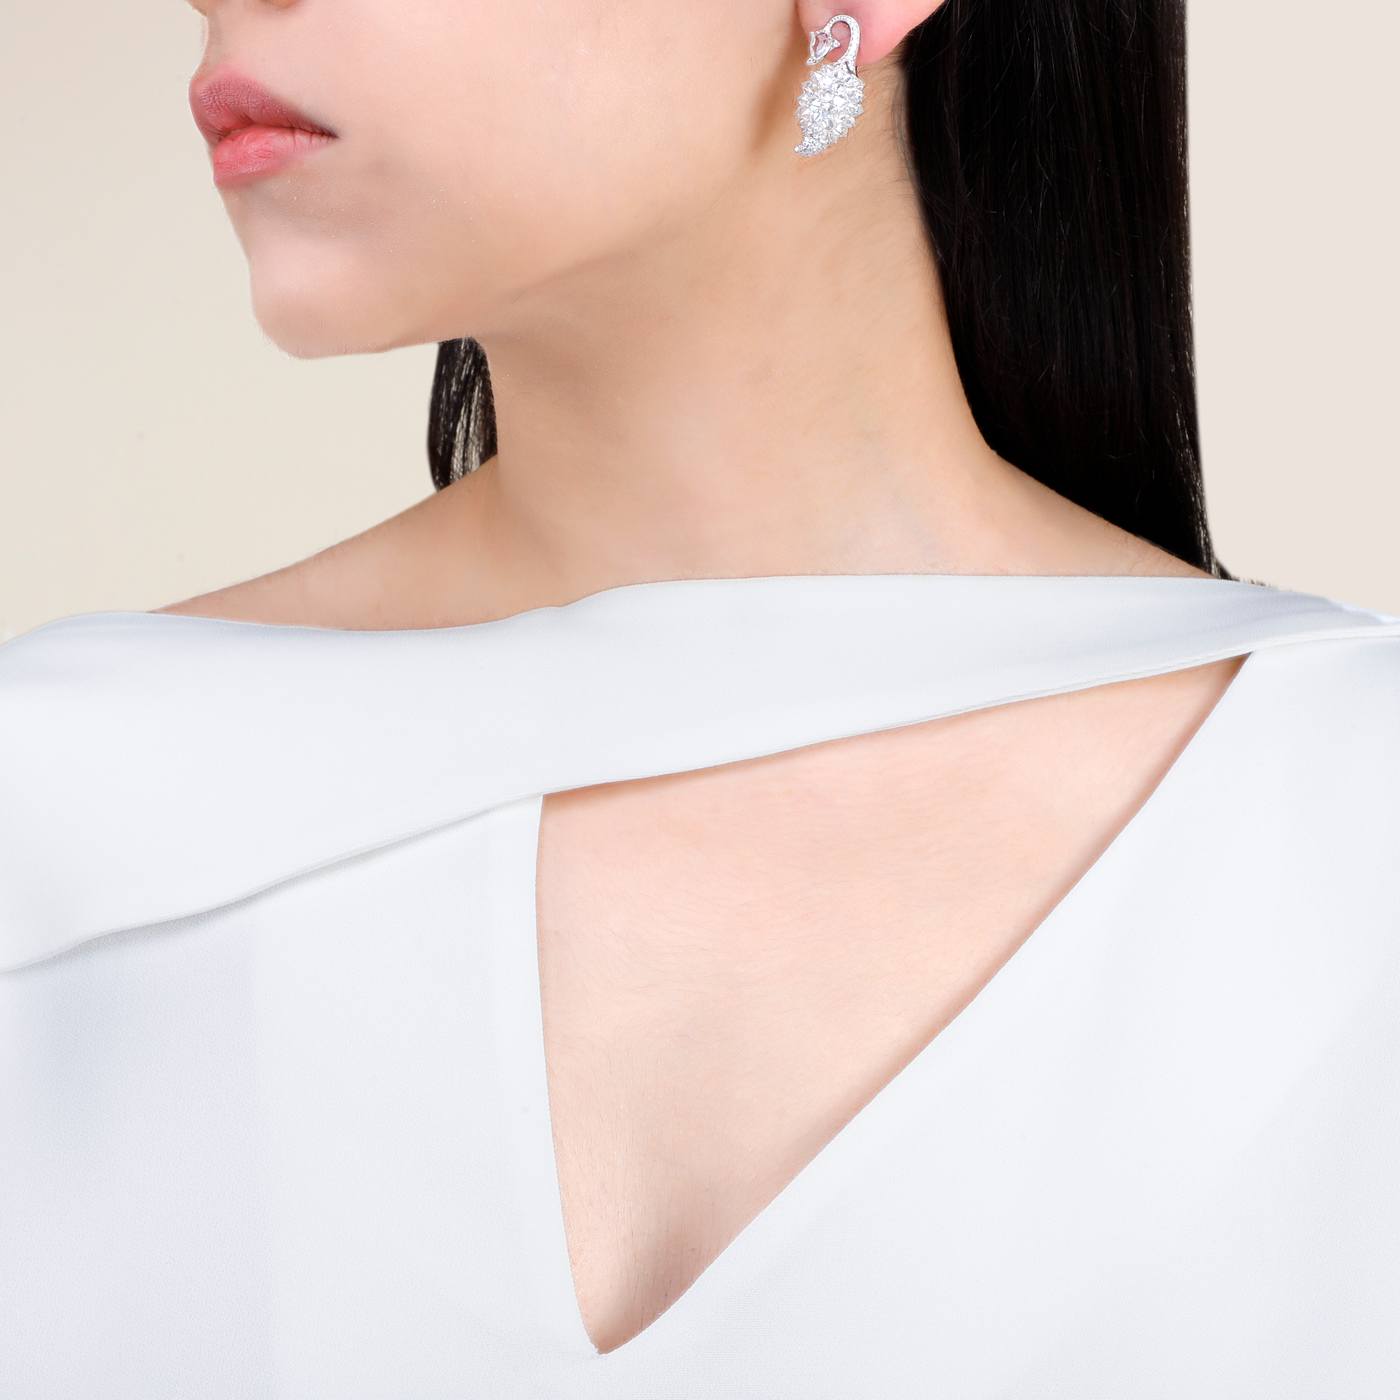 Conifer Diamond Encrusted Earrings by Umrao Jewels